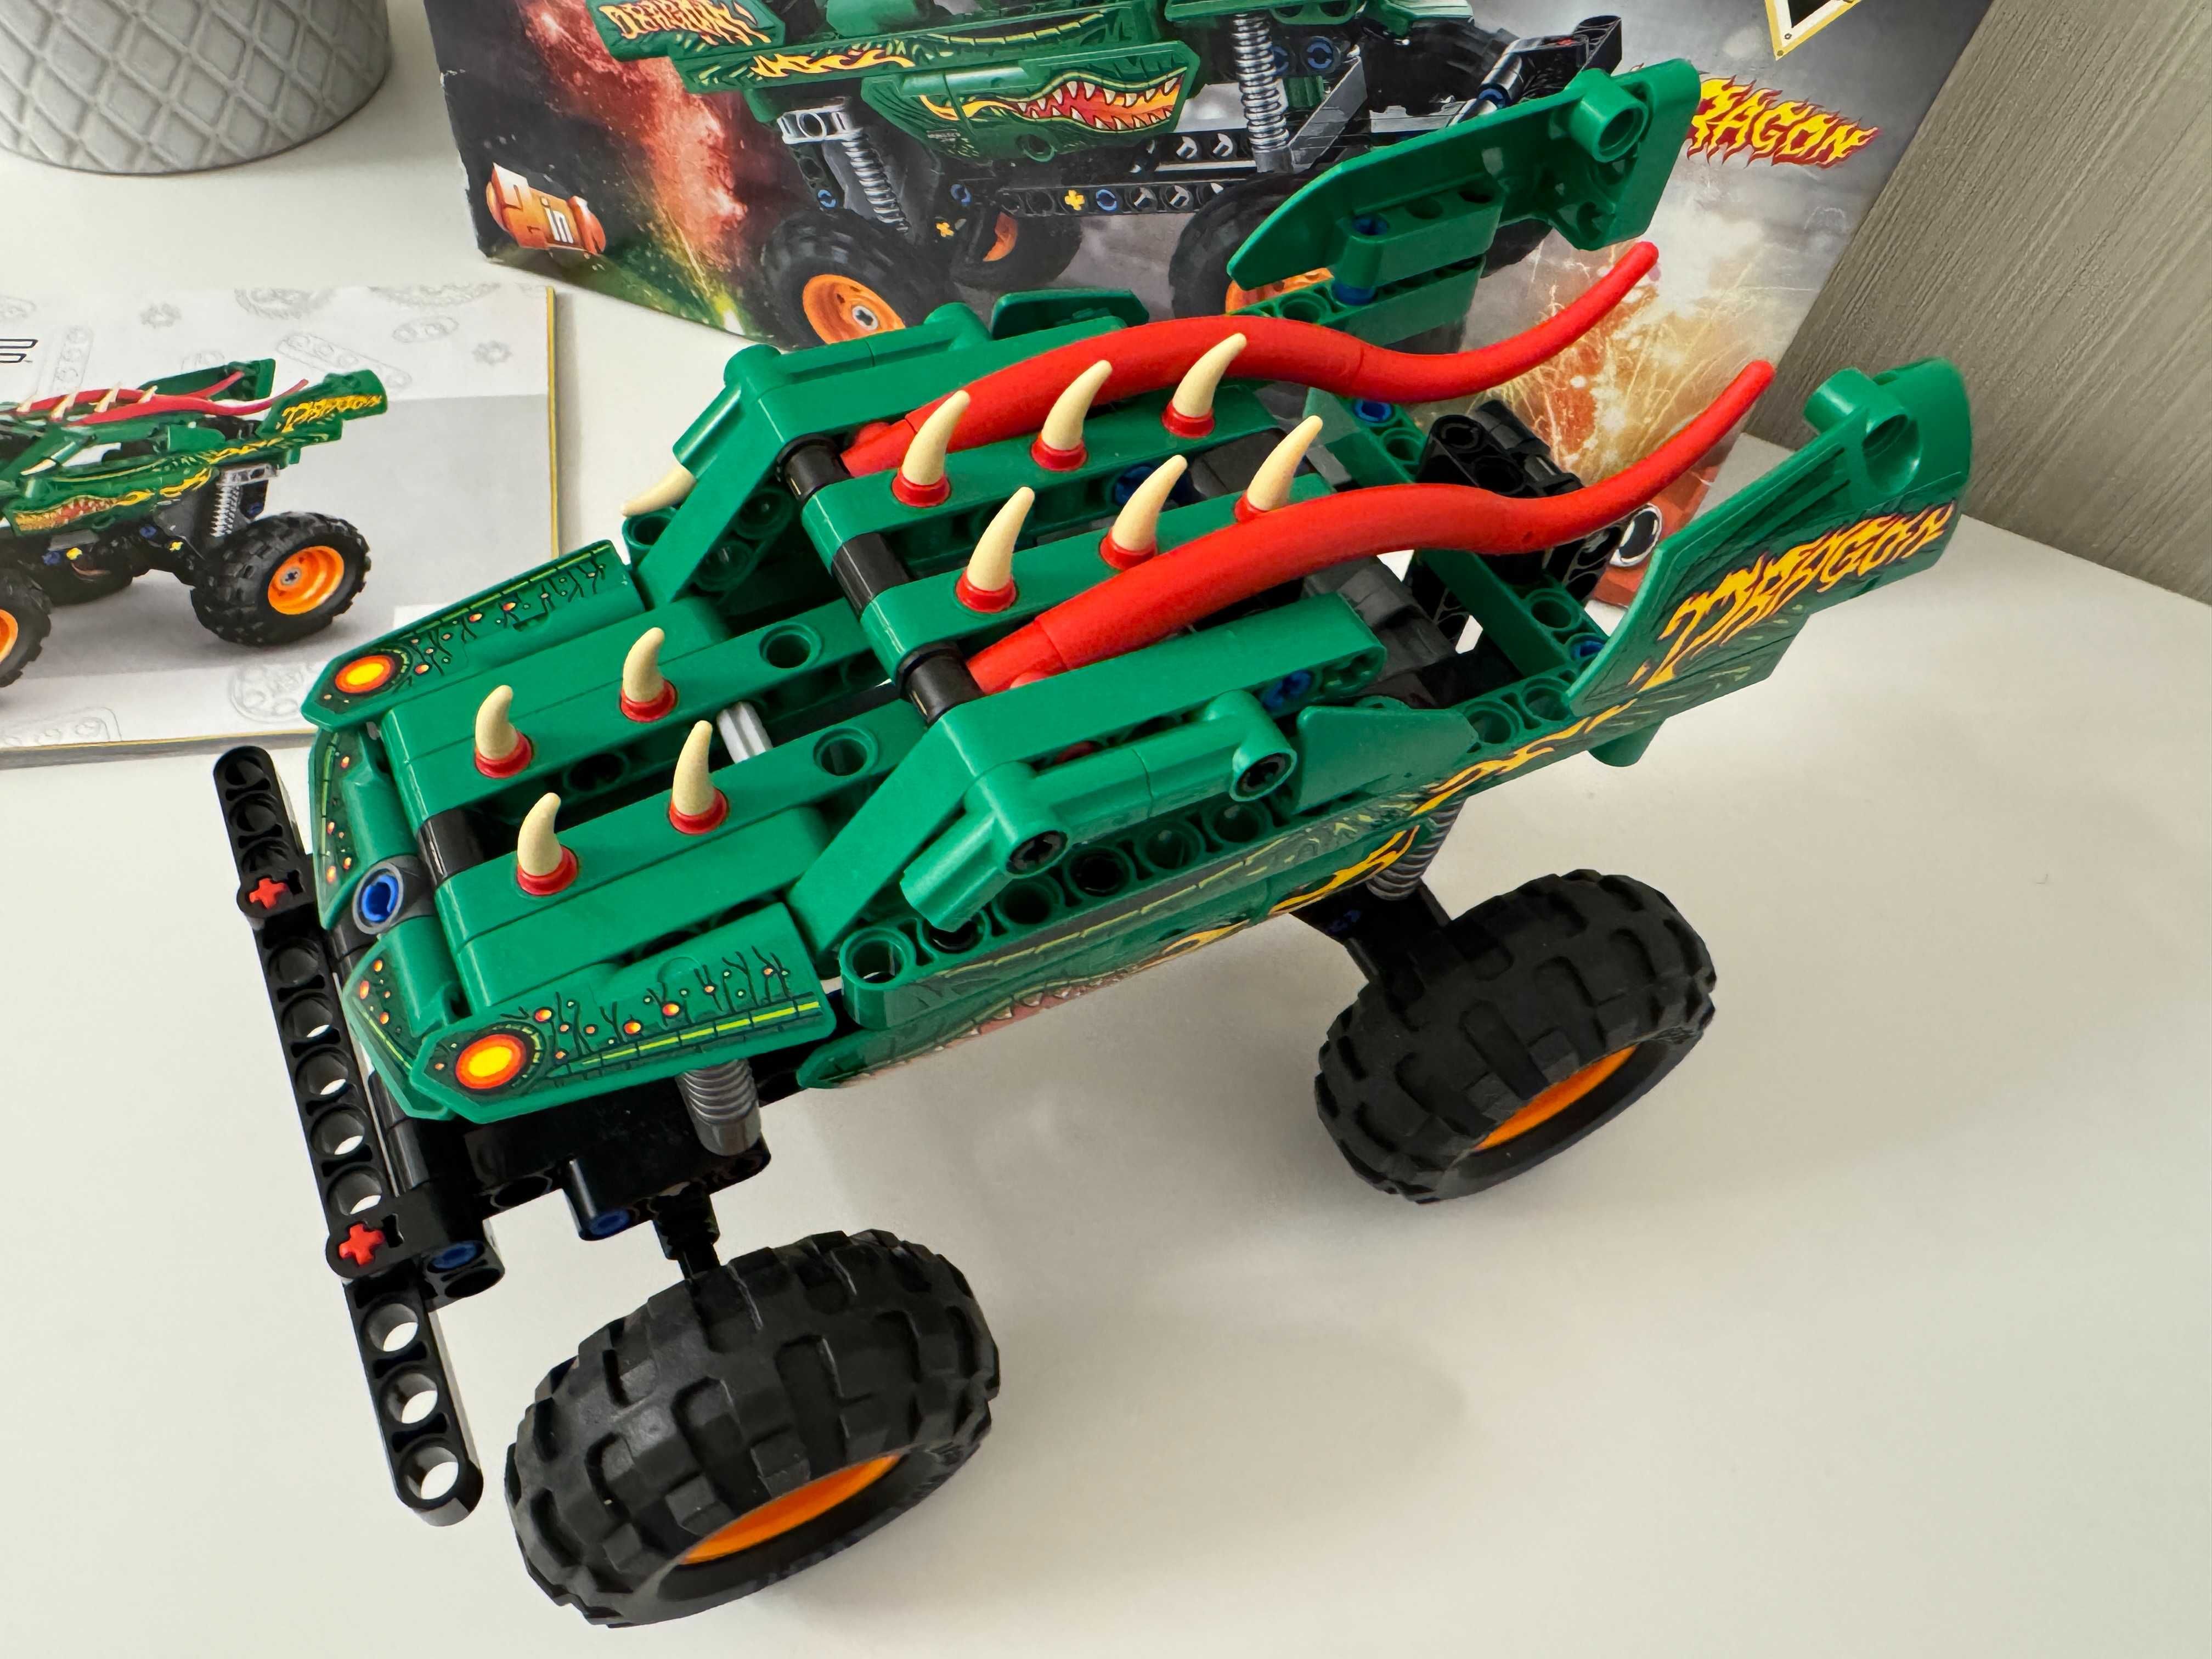 LEGO Technic - Monster Jam™ Dragon™ 42149, 217 piese